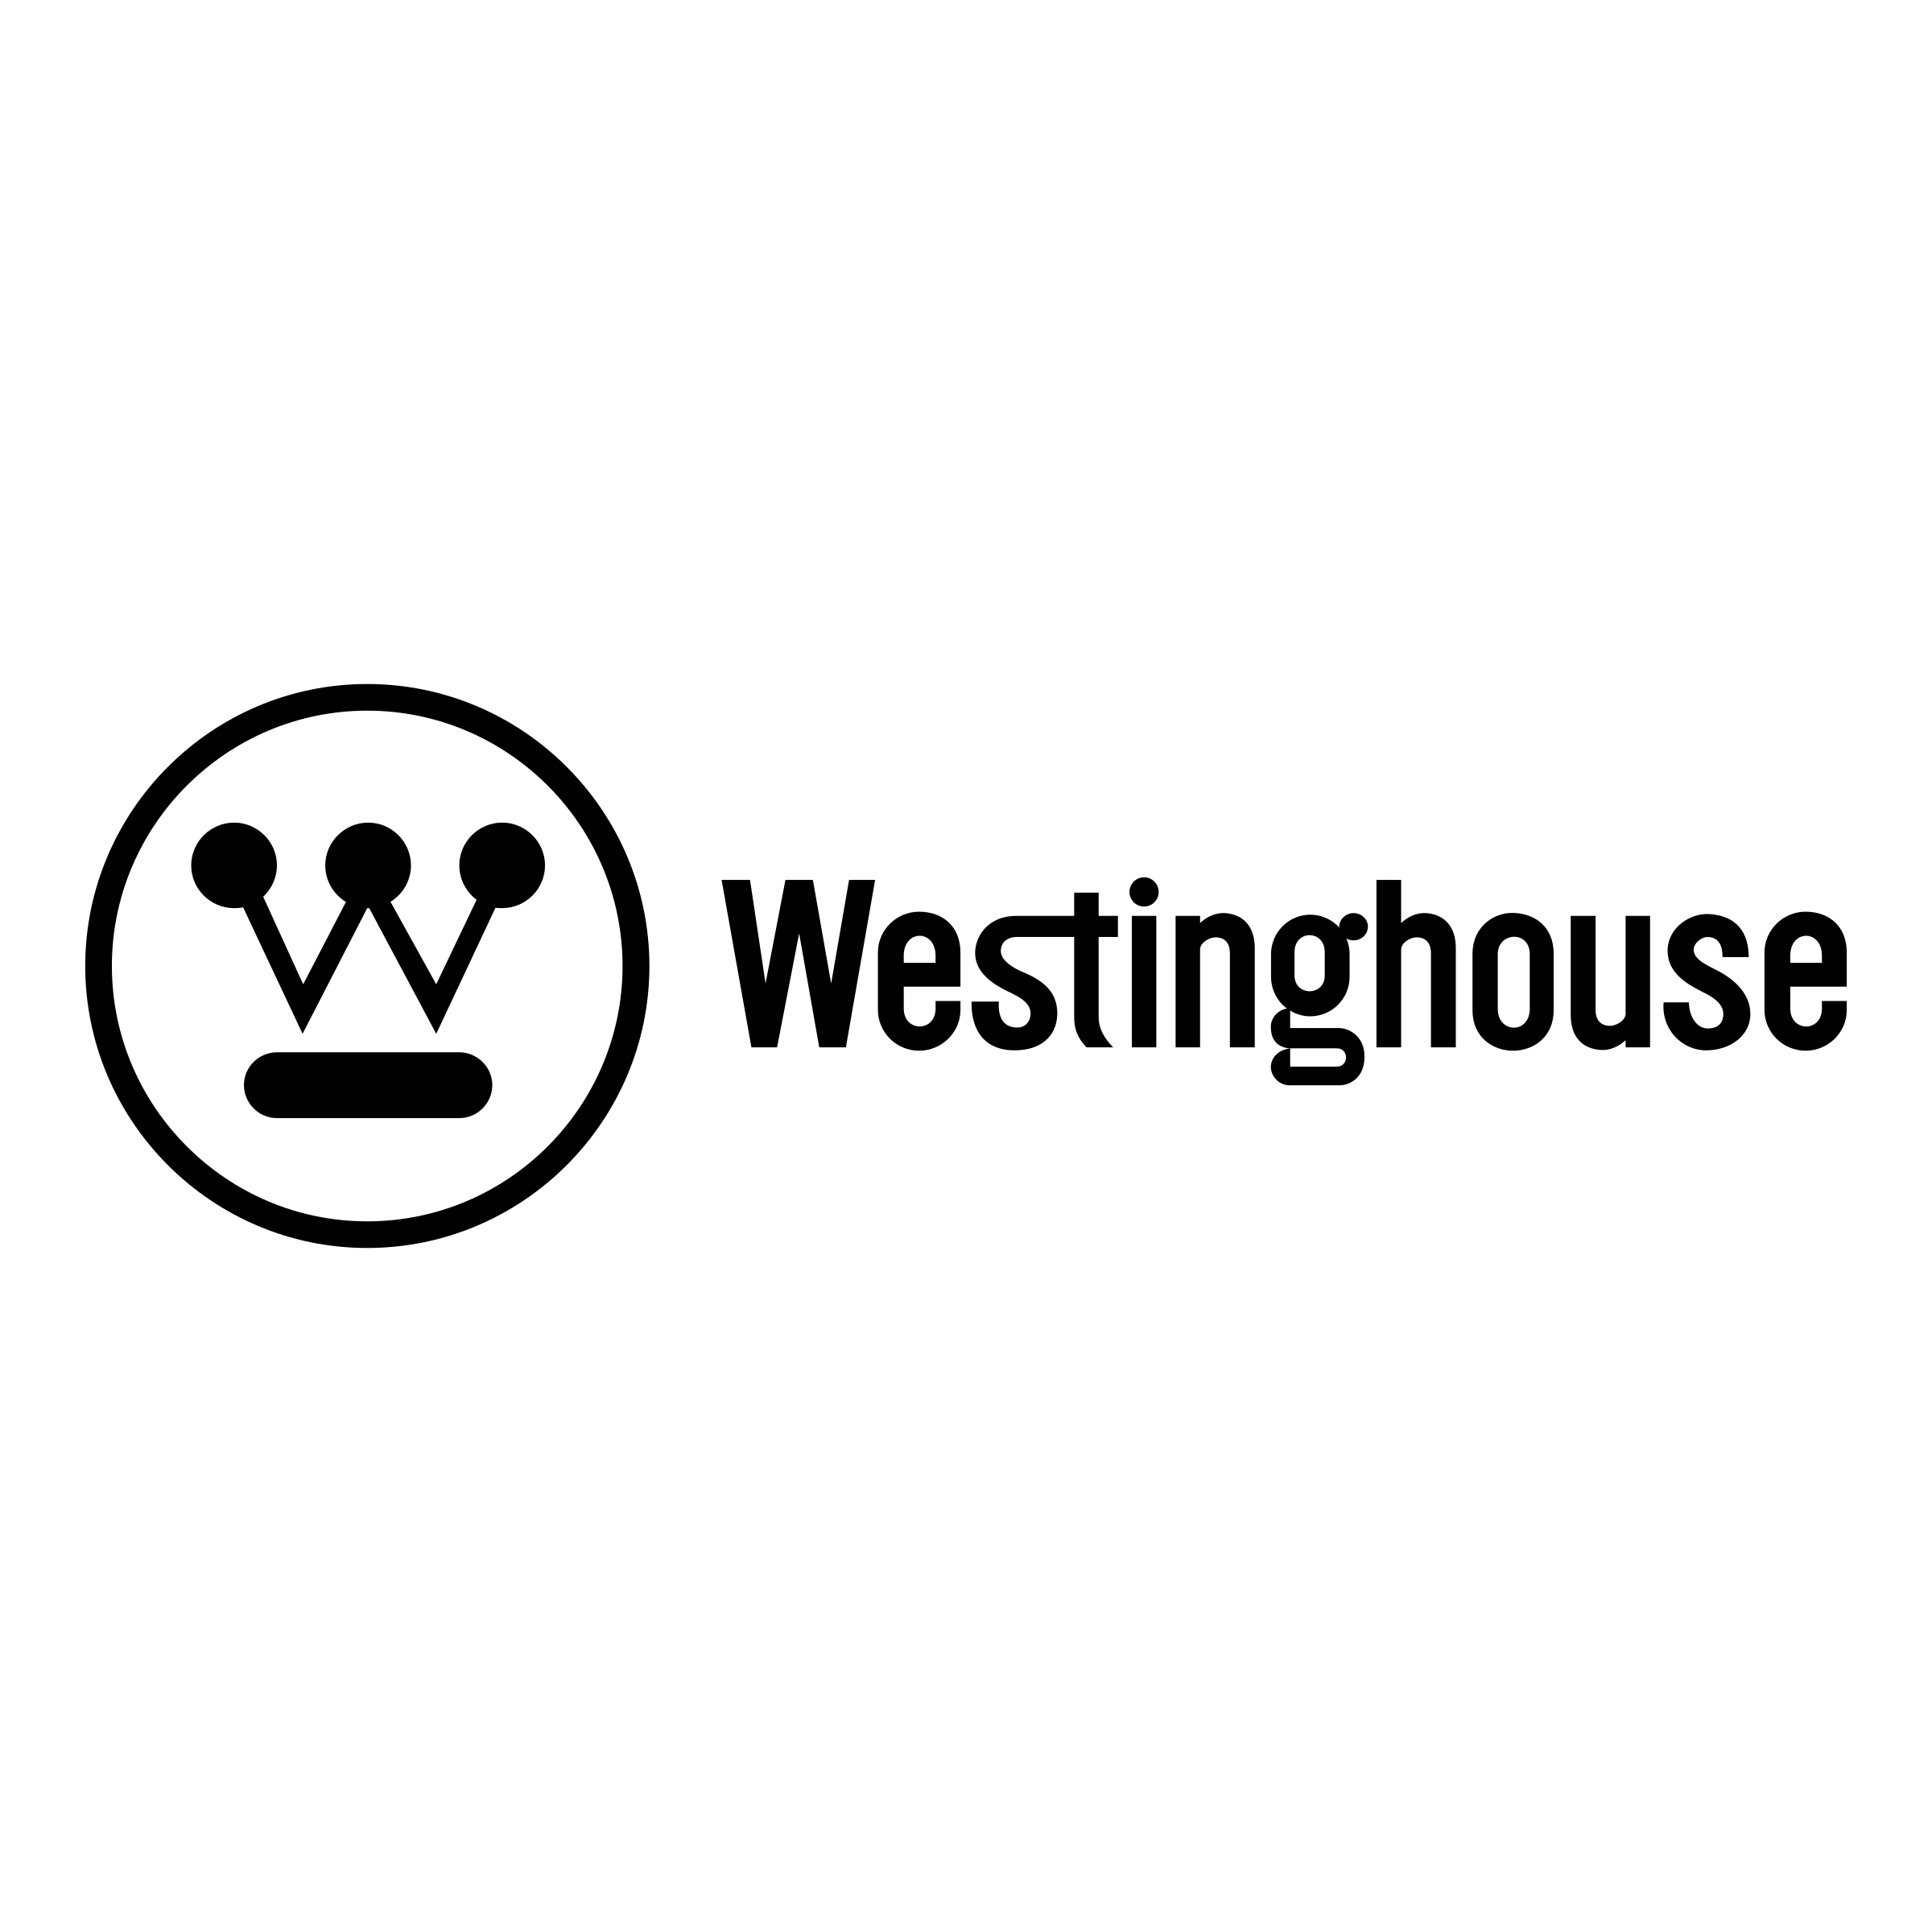 Westinghouse Logo - Pluspng